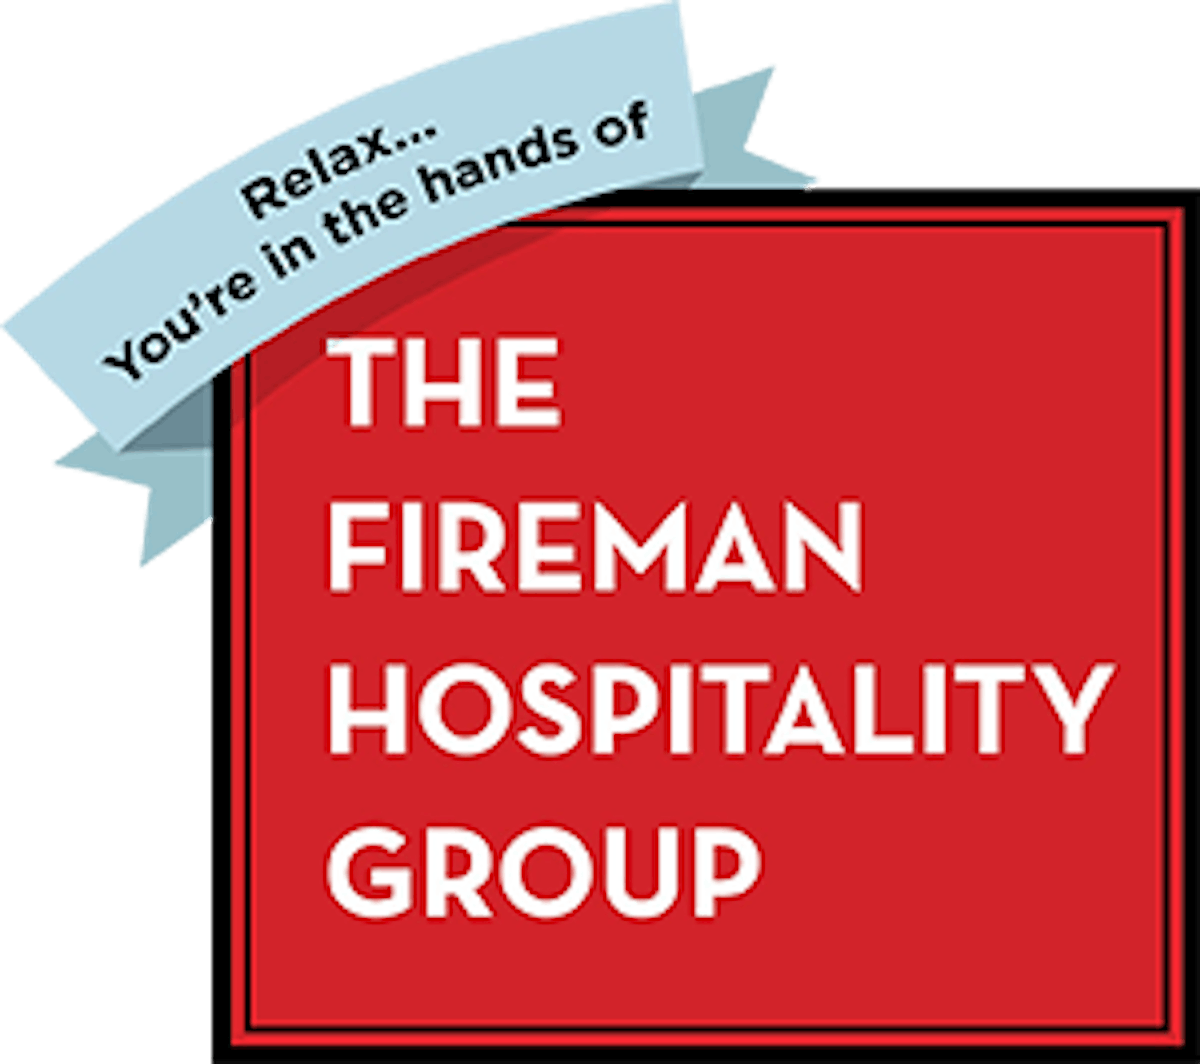 The Fireman Hospitality Group logo